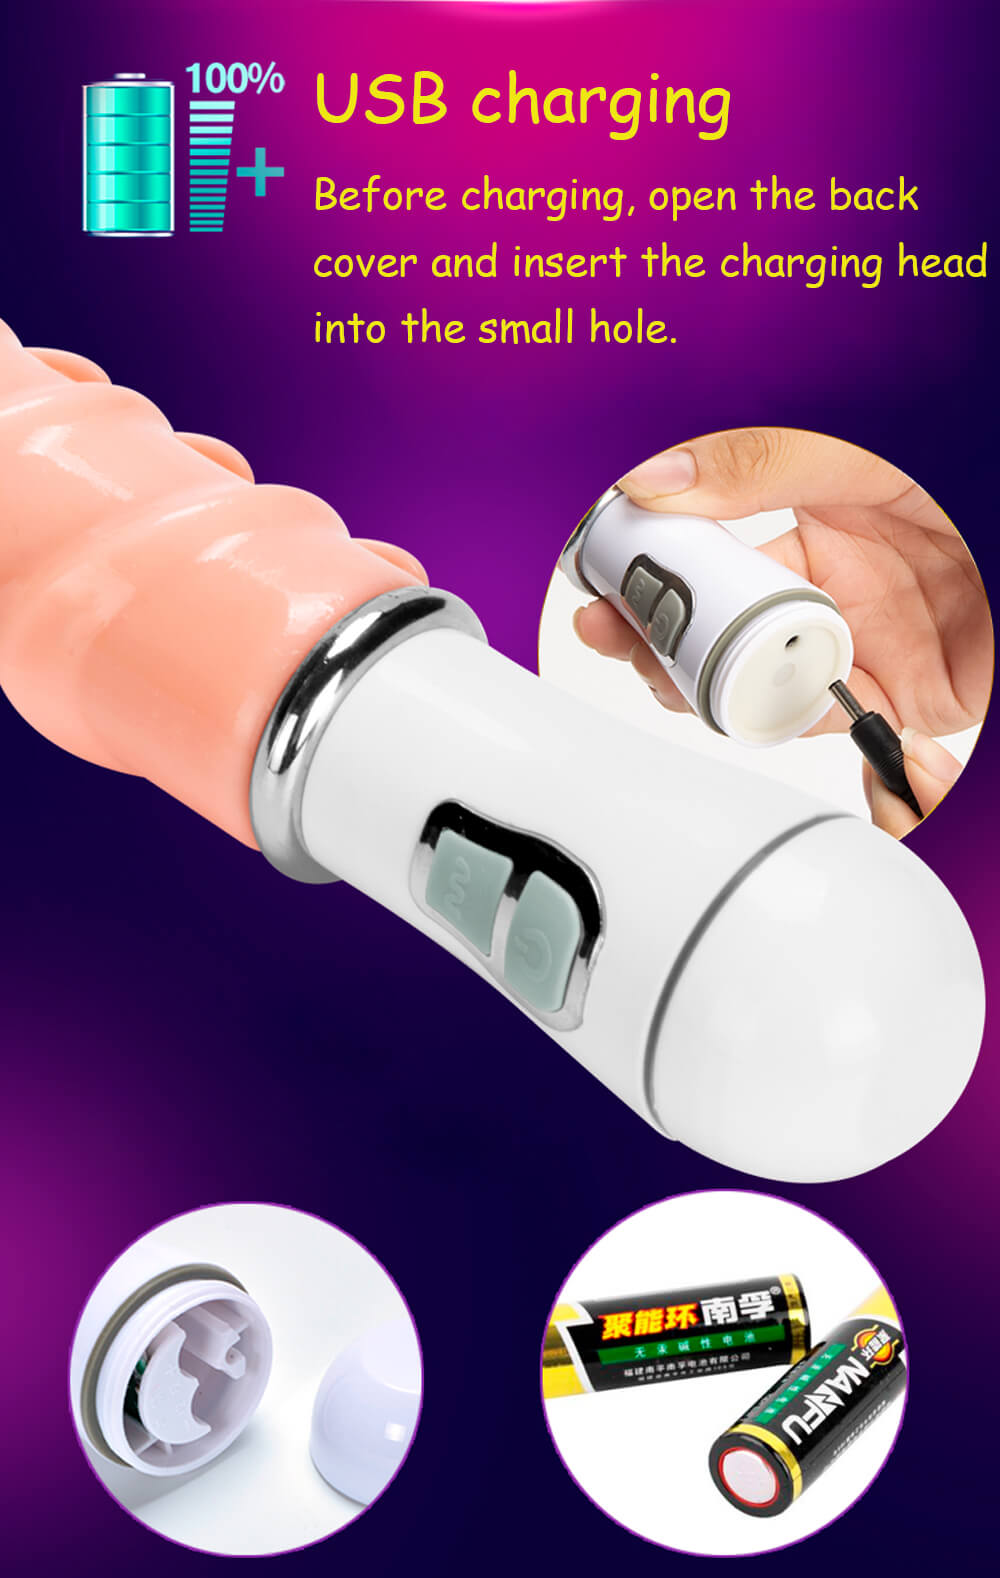 Vibrating-Stick-Tongue-Flapping-Female-Masturbator-Vibrator-Dildo-Nude-Color-Artifical-Clitoris-Latex-Adult-Sex-Toys